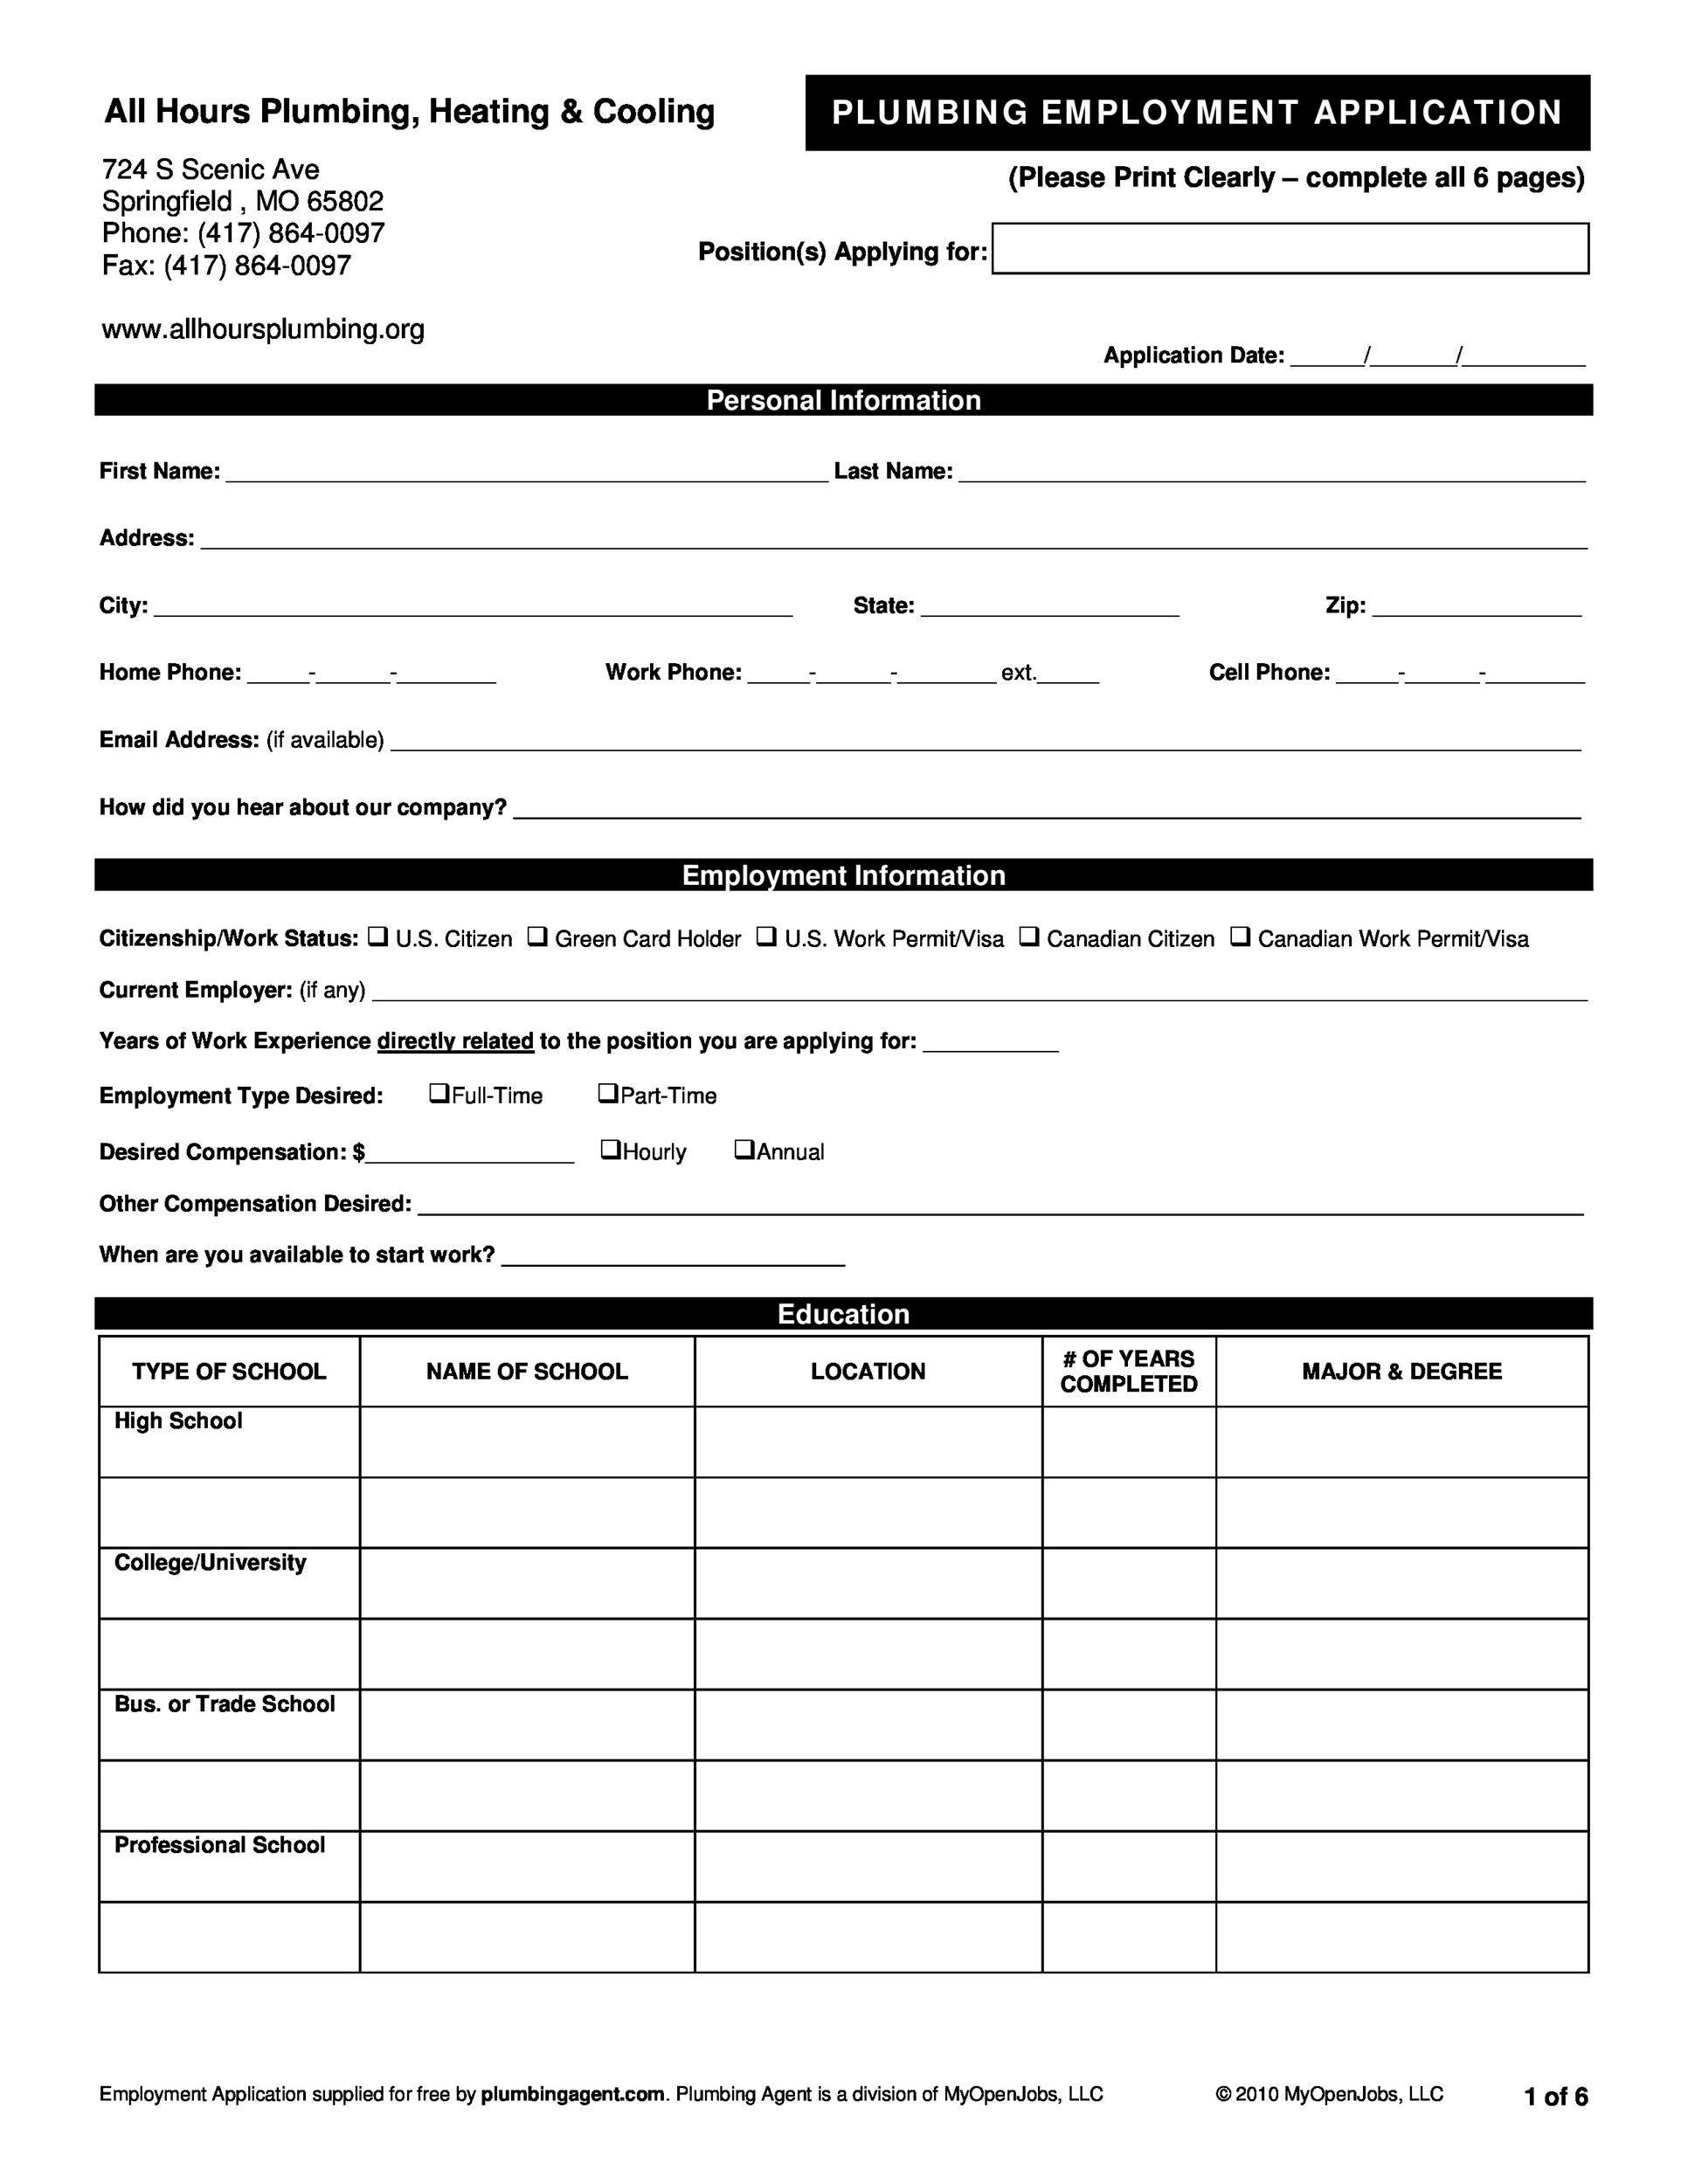 50 Free Employment Job Application Form Templates Printable TemplateLab - Application For Employment Form Free Printable